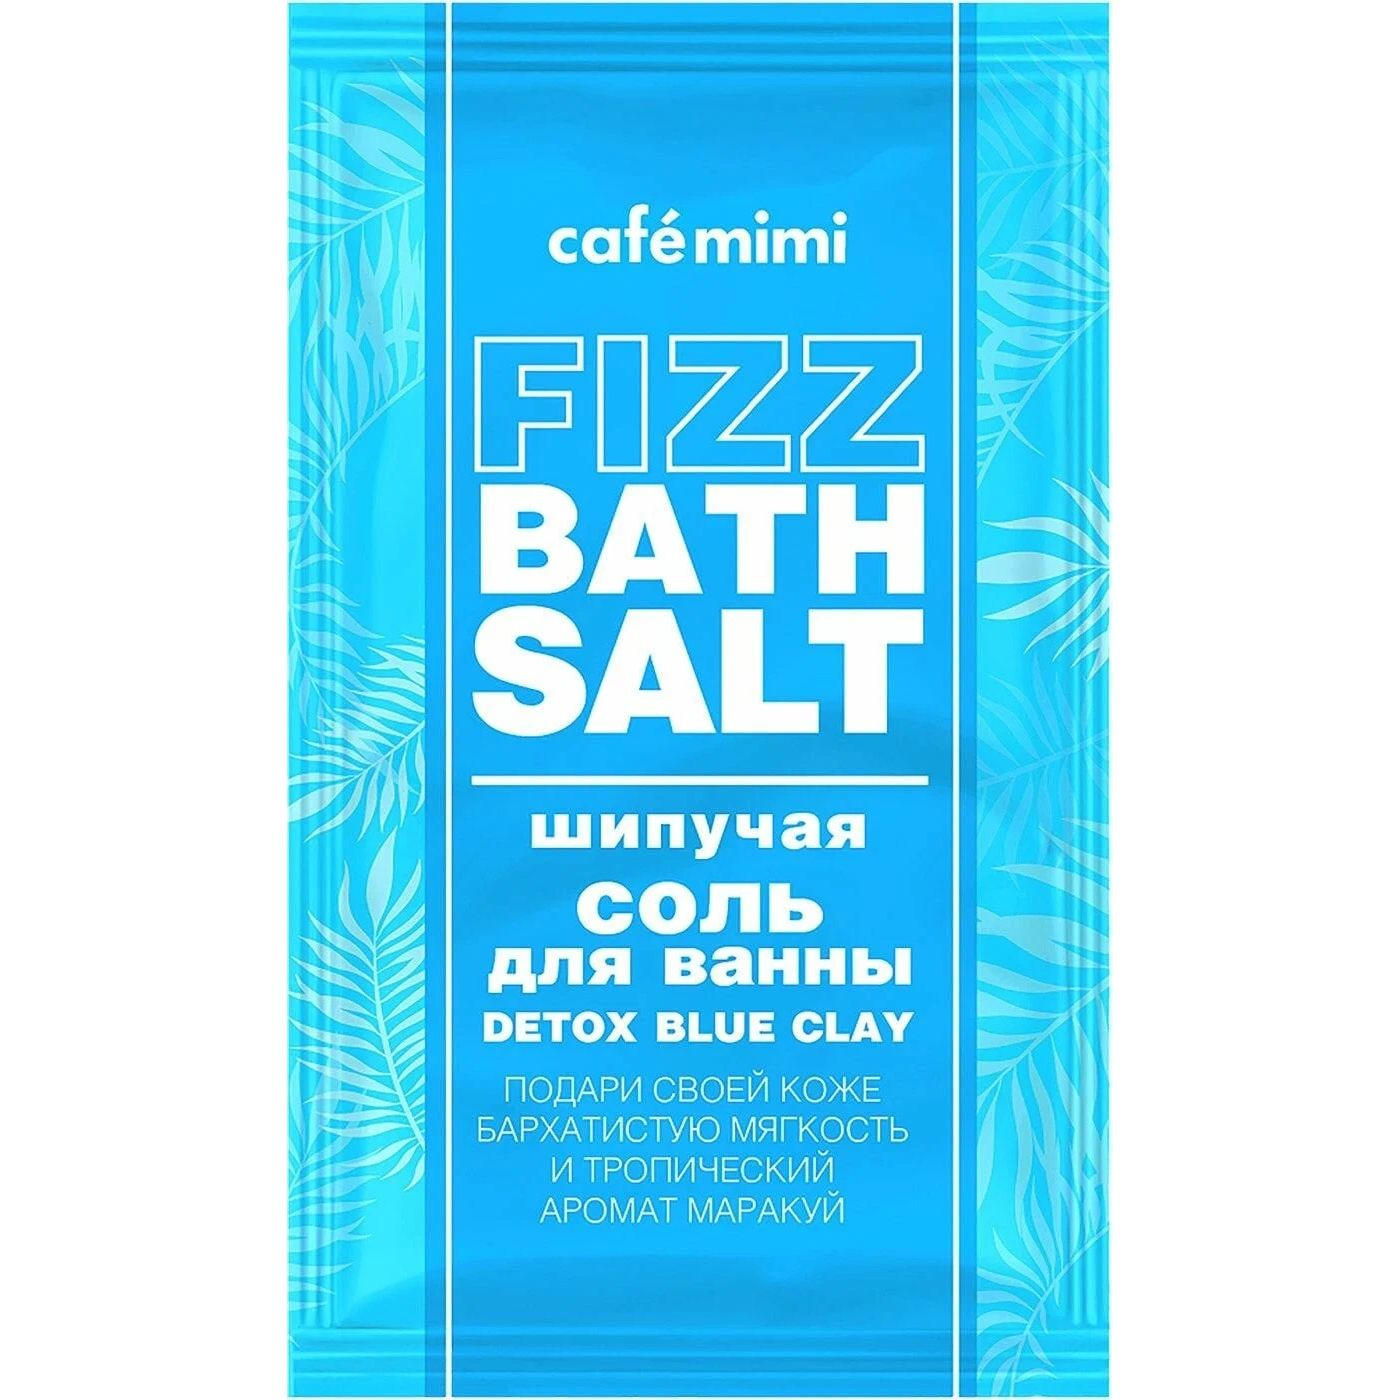 Соль для ванн Cafemimi Fizz Bath Salt Detox Blue Clay шипучая, 100 г соль для ванн cafe mimi fizz bath salt detox charcoal 100г